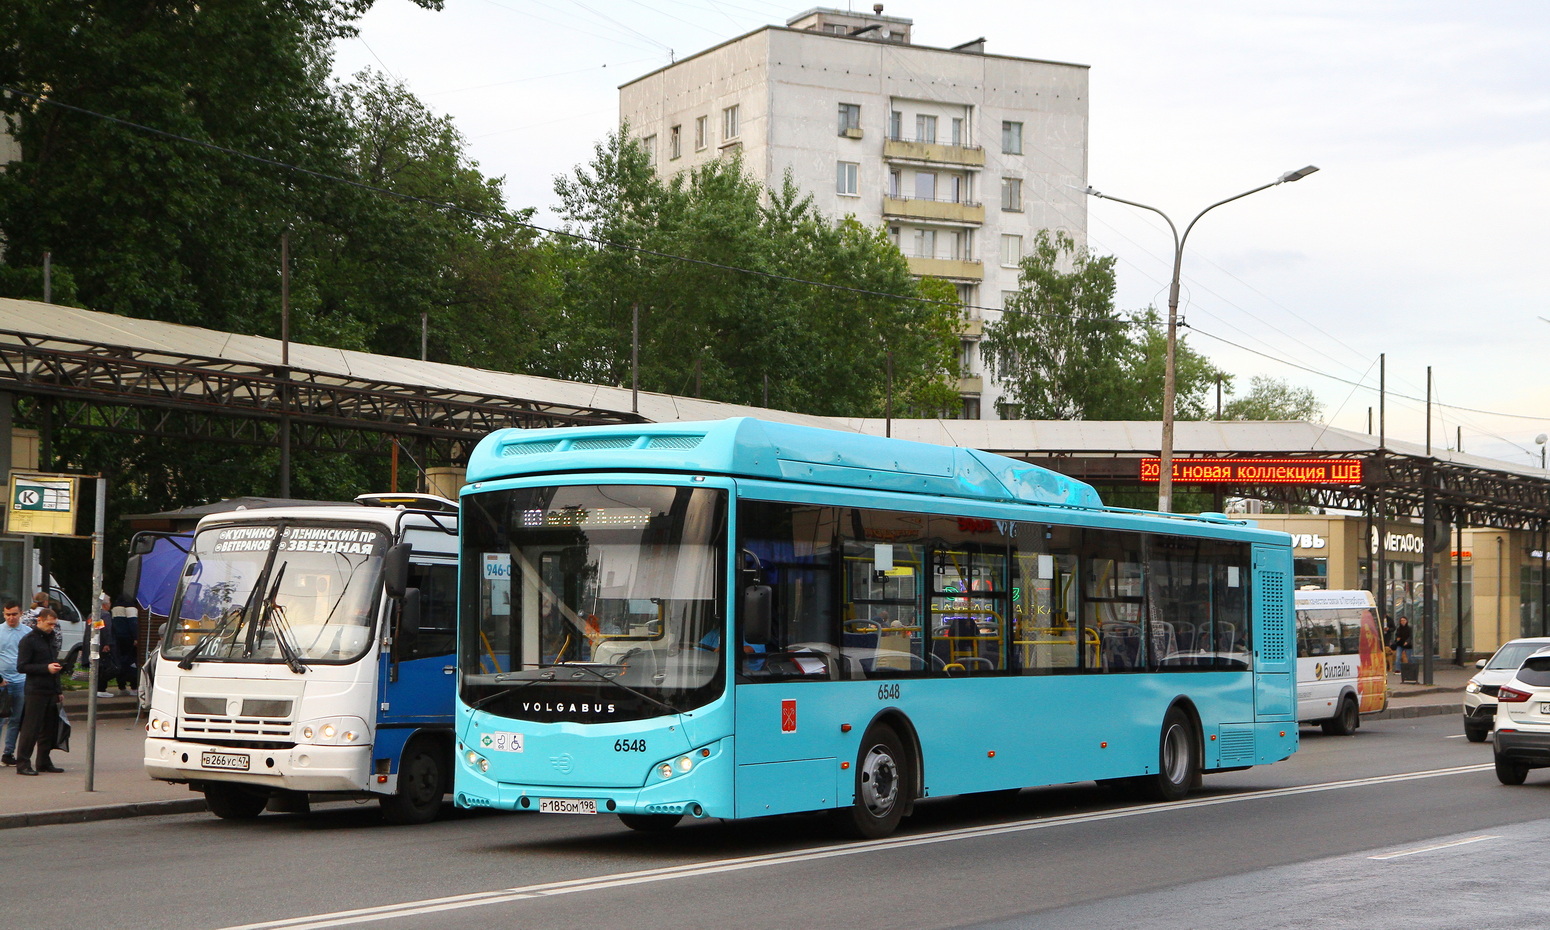 Petrohrad, Volgabus-5270.G4 (CNG) č. 6548